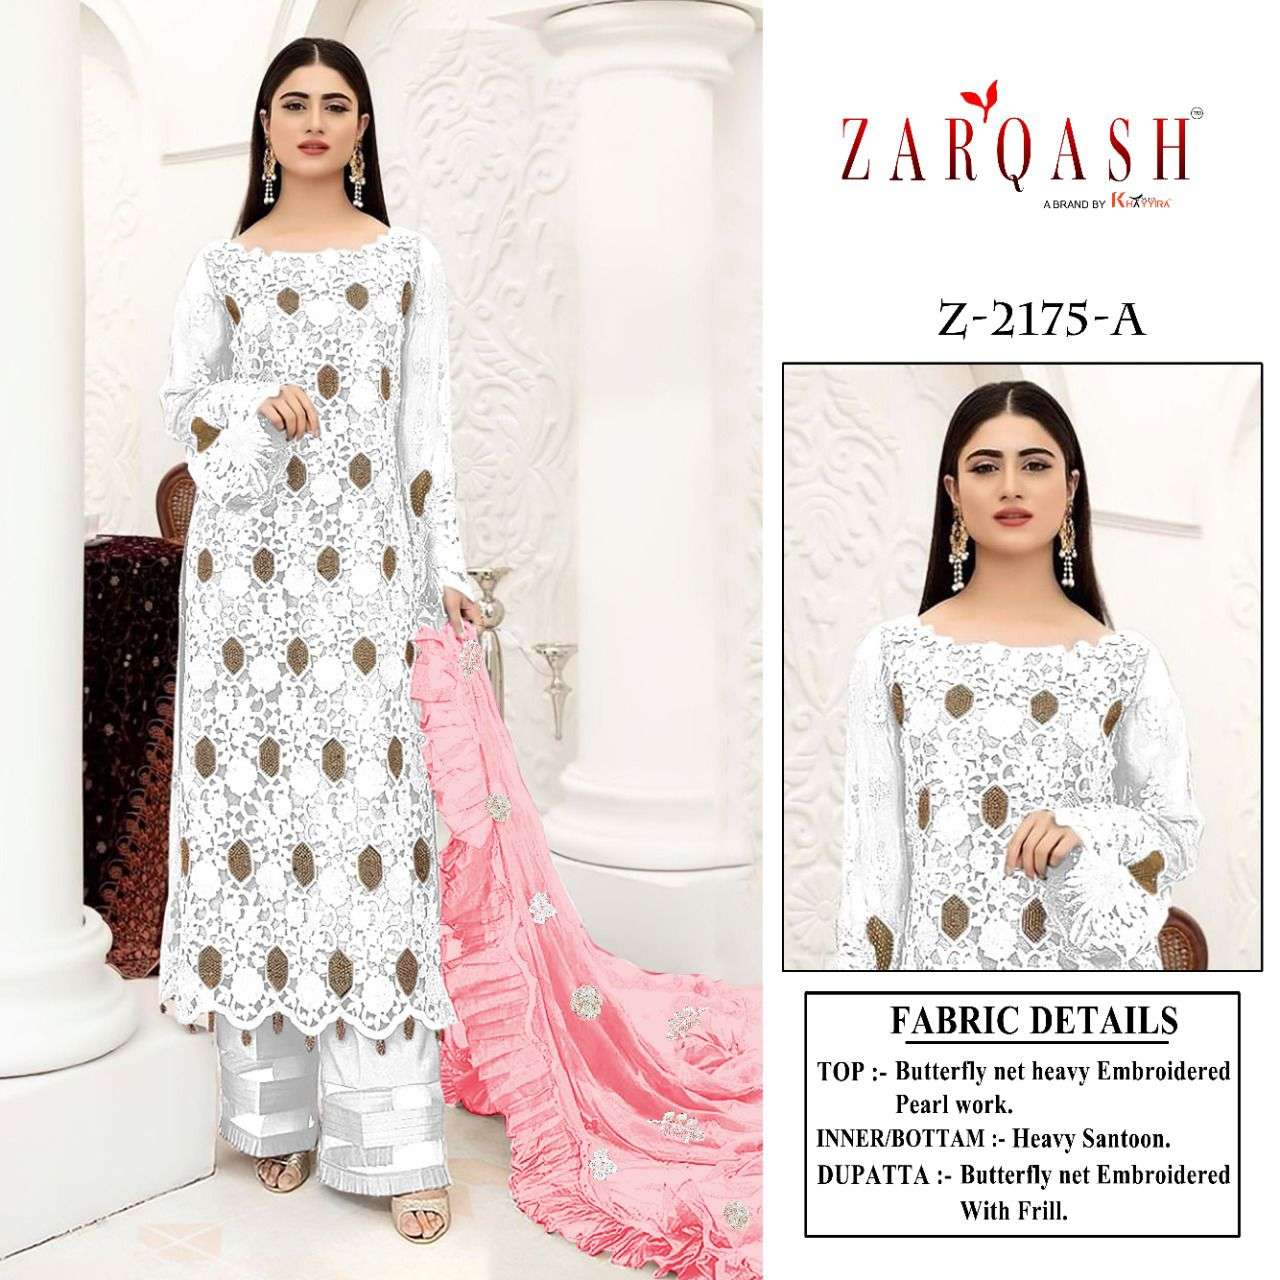 Zarqash Z-2175 butterfly net embroidery suit 